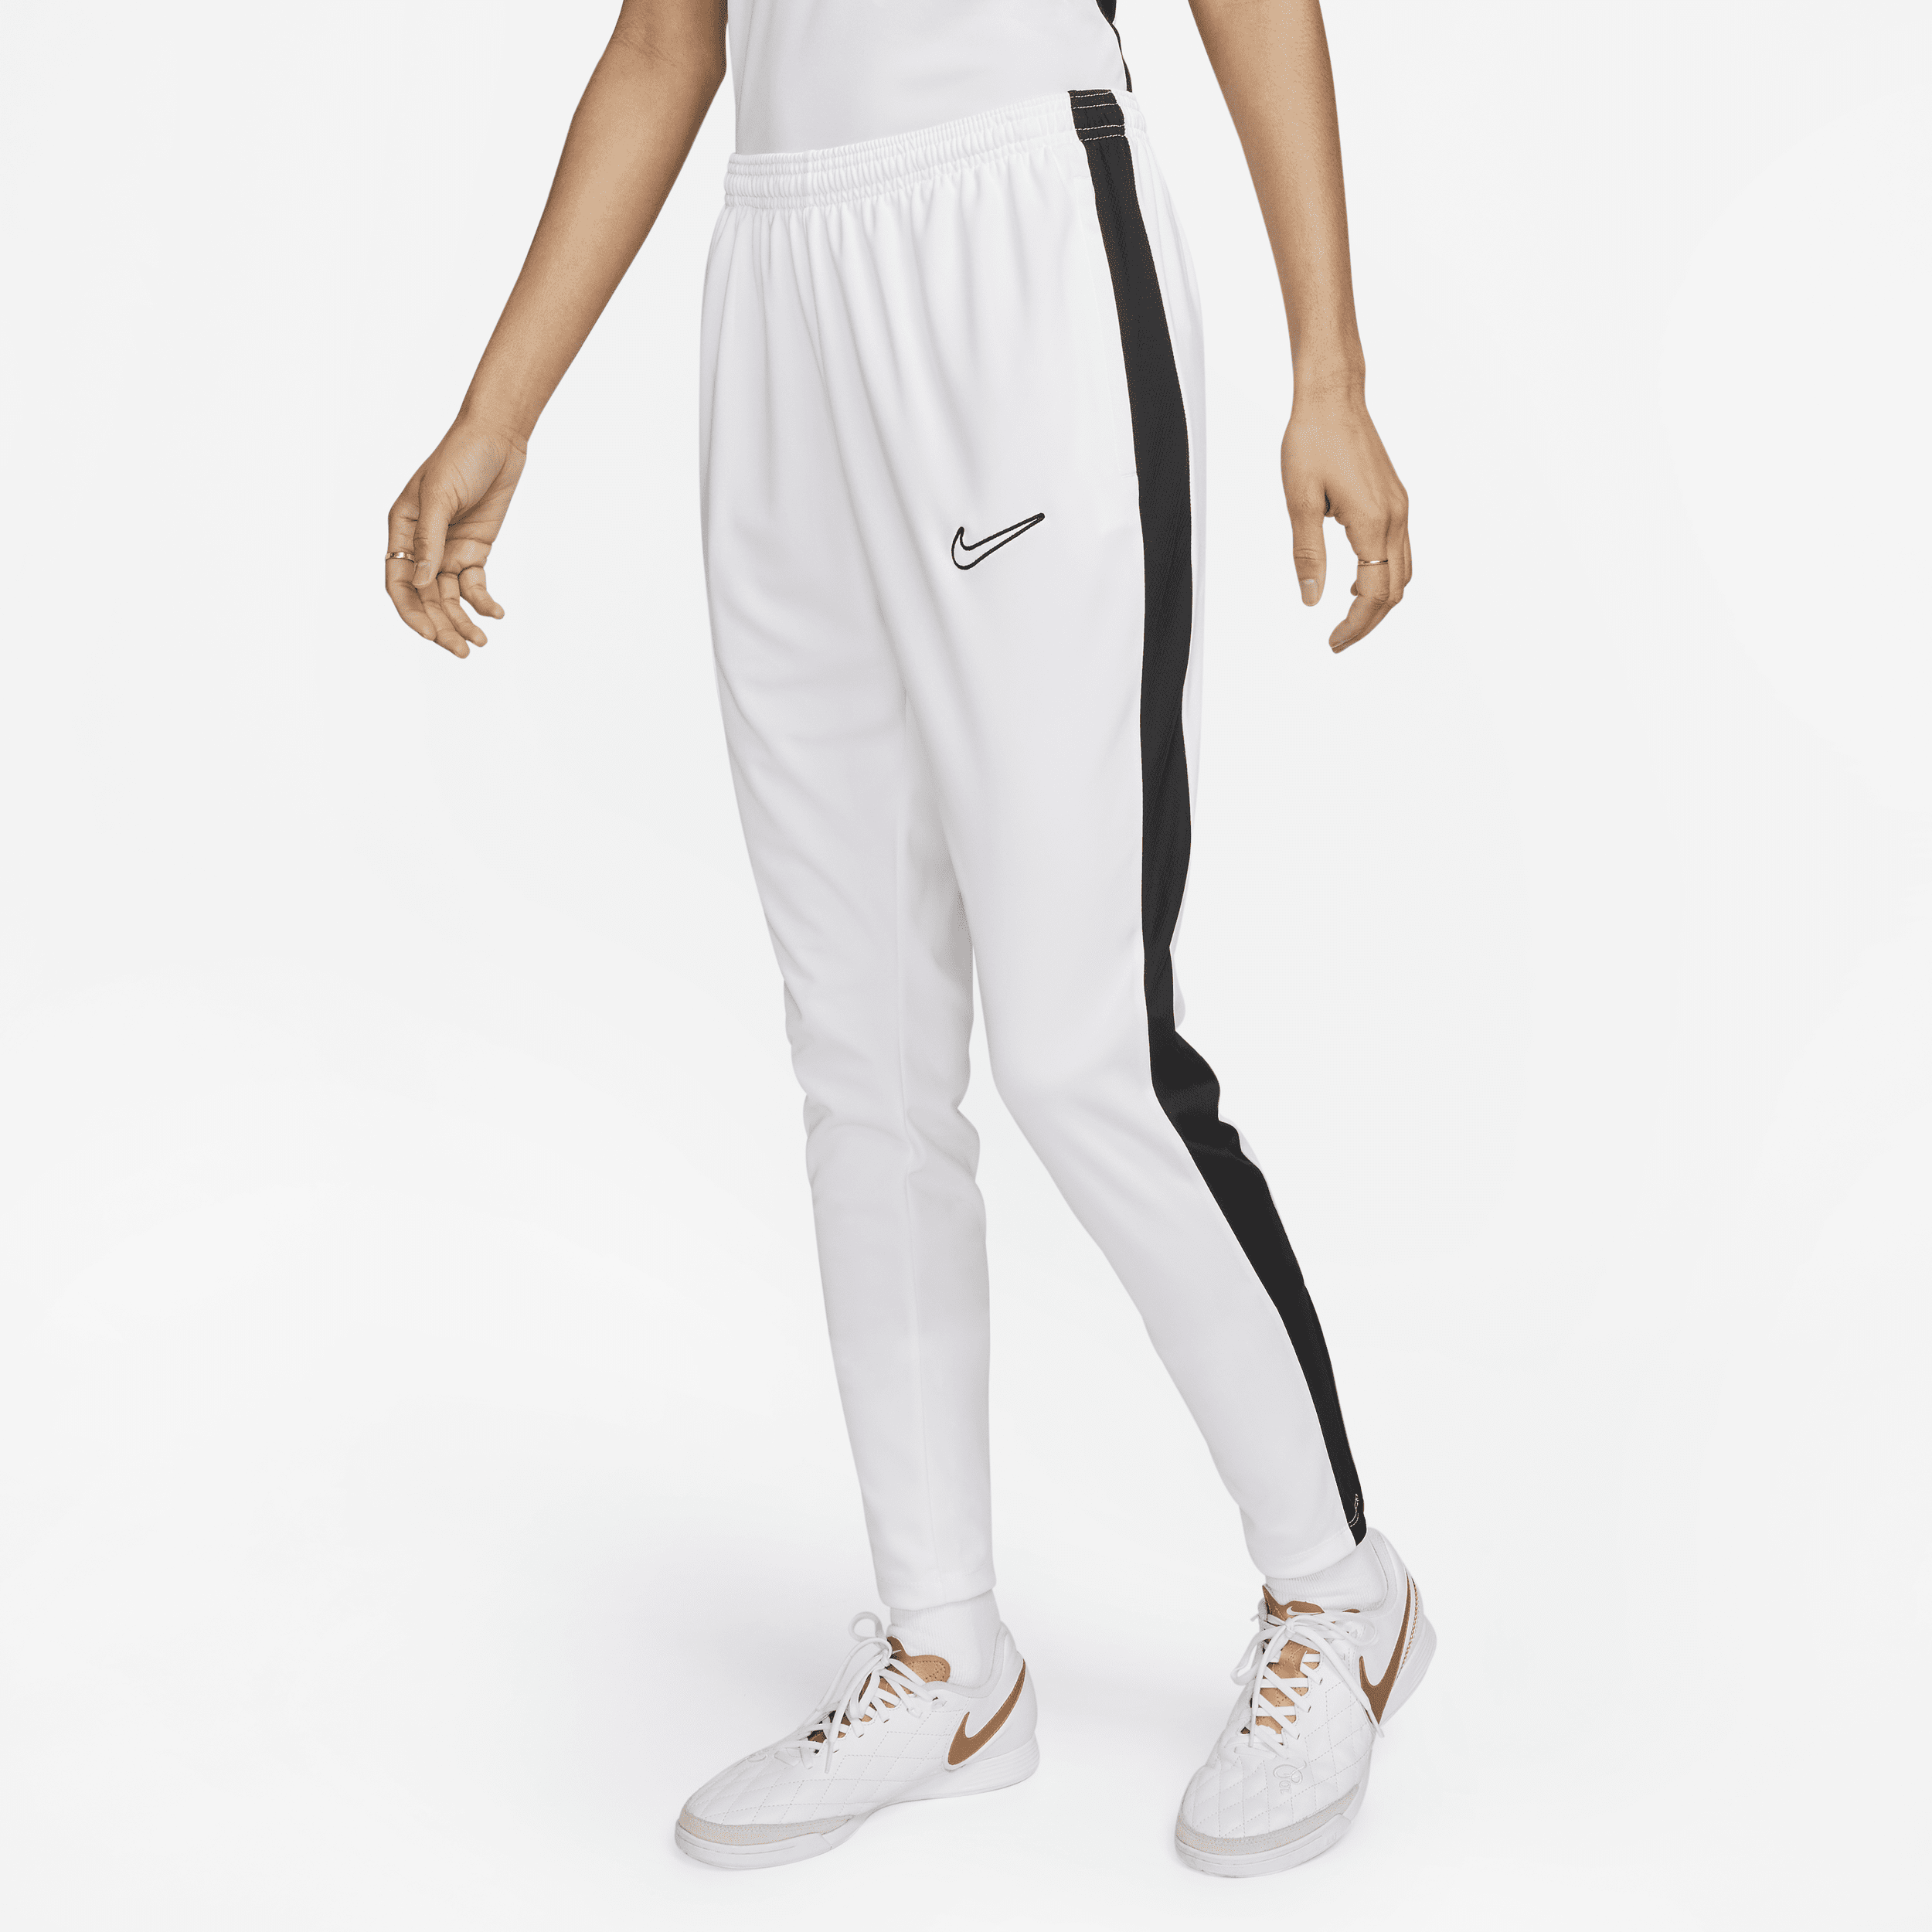 Nike Women's Dri-fit Academy Soccer Pants In White